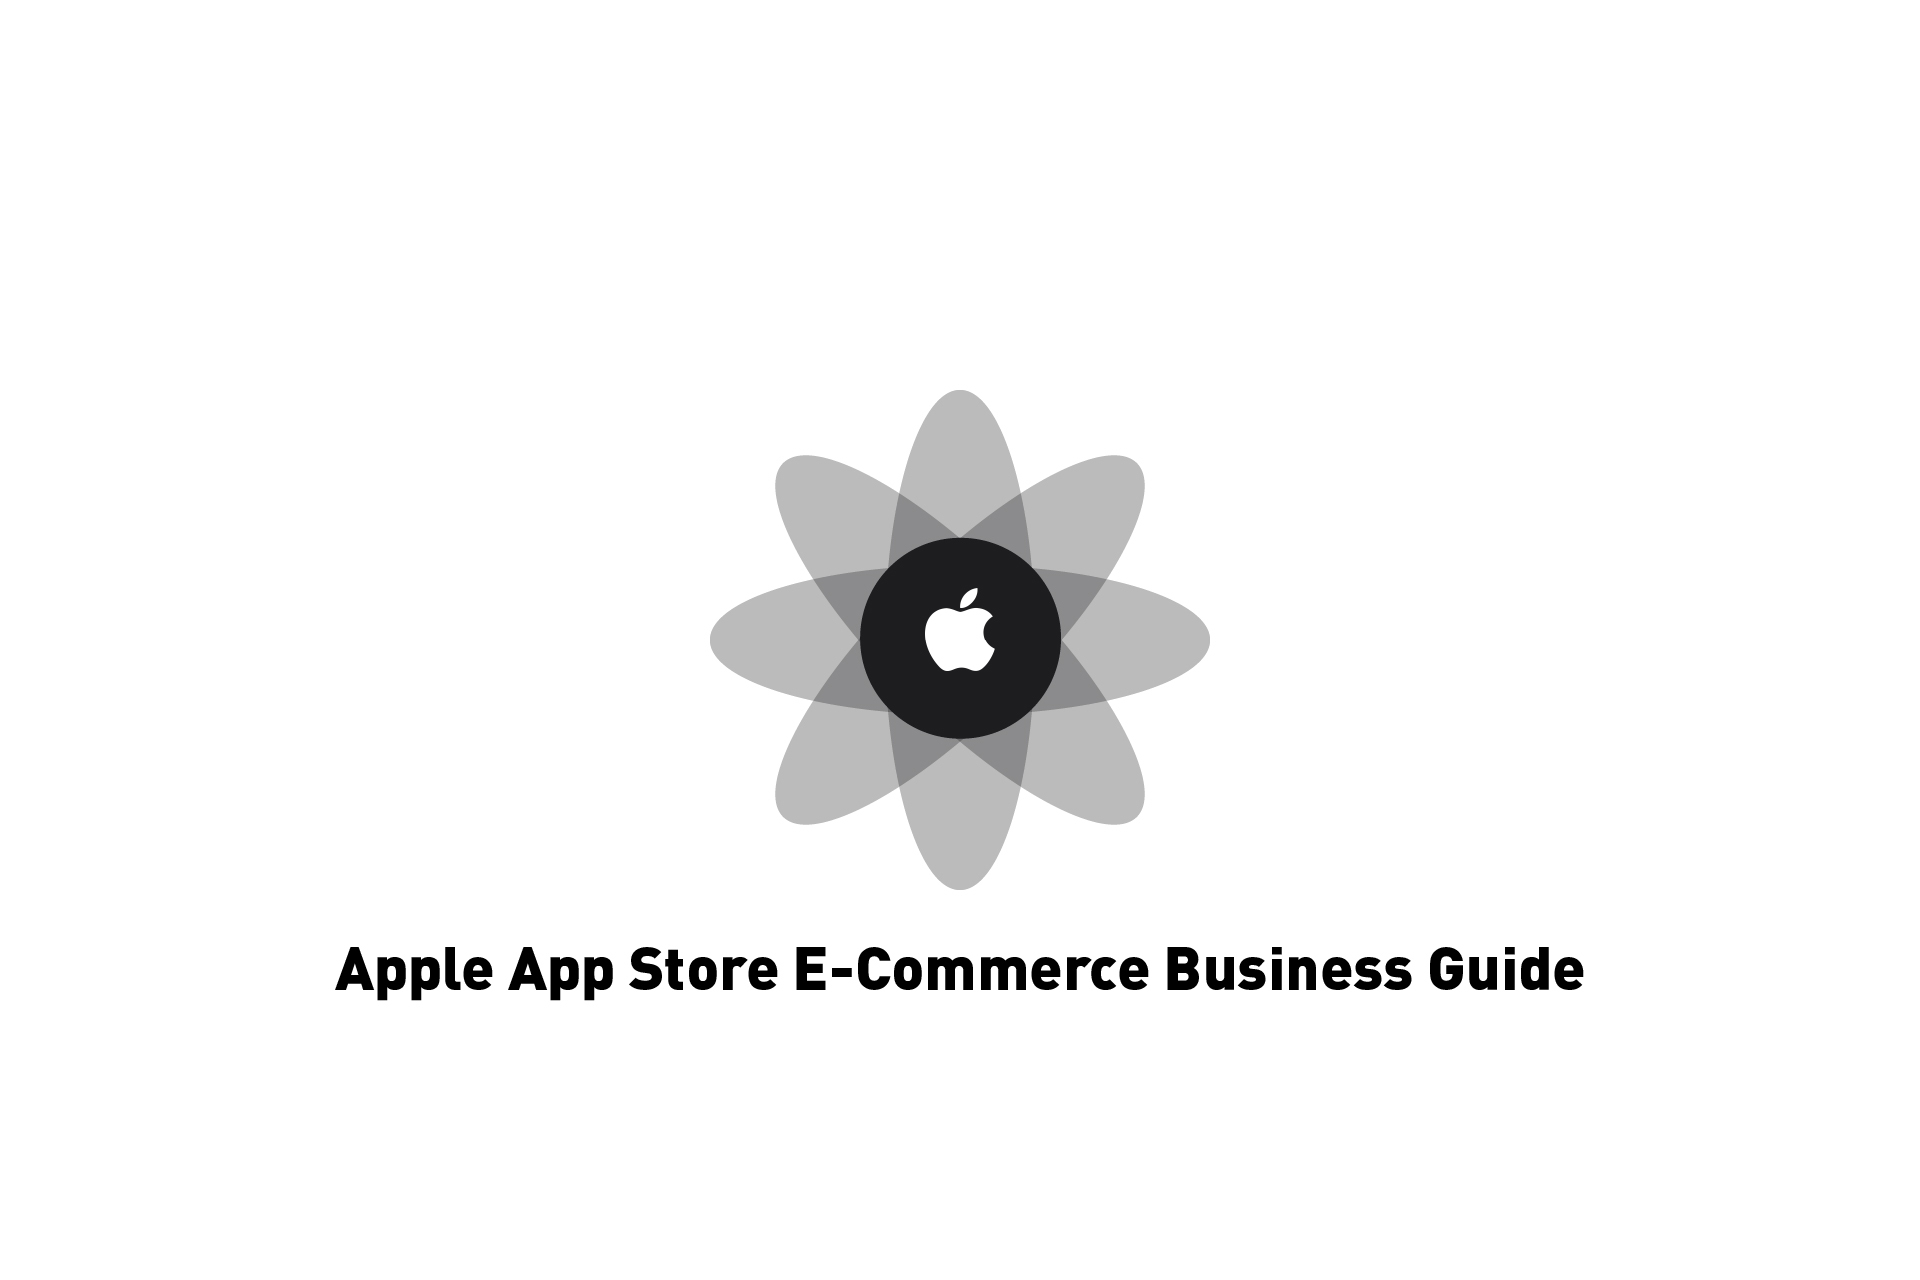 Apple App Store E-Commerce Business Guide